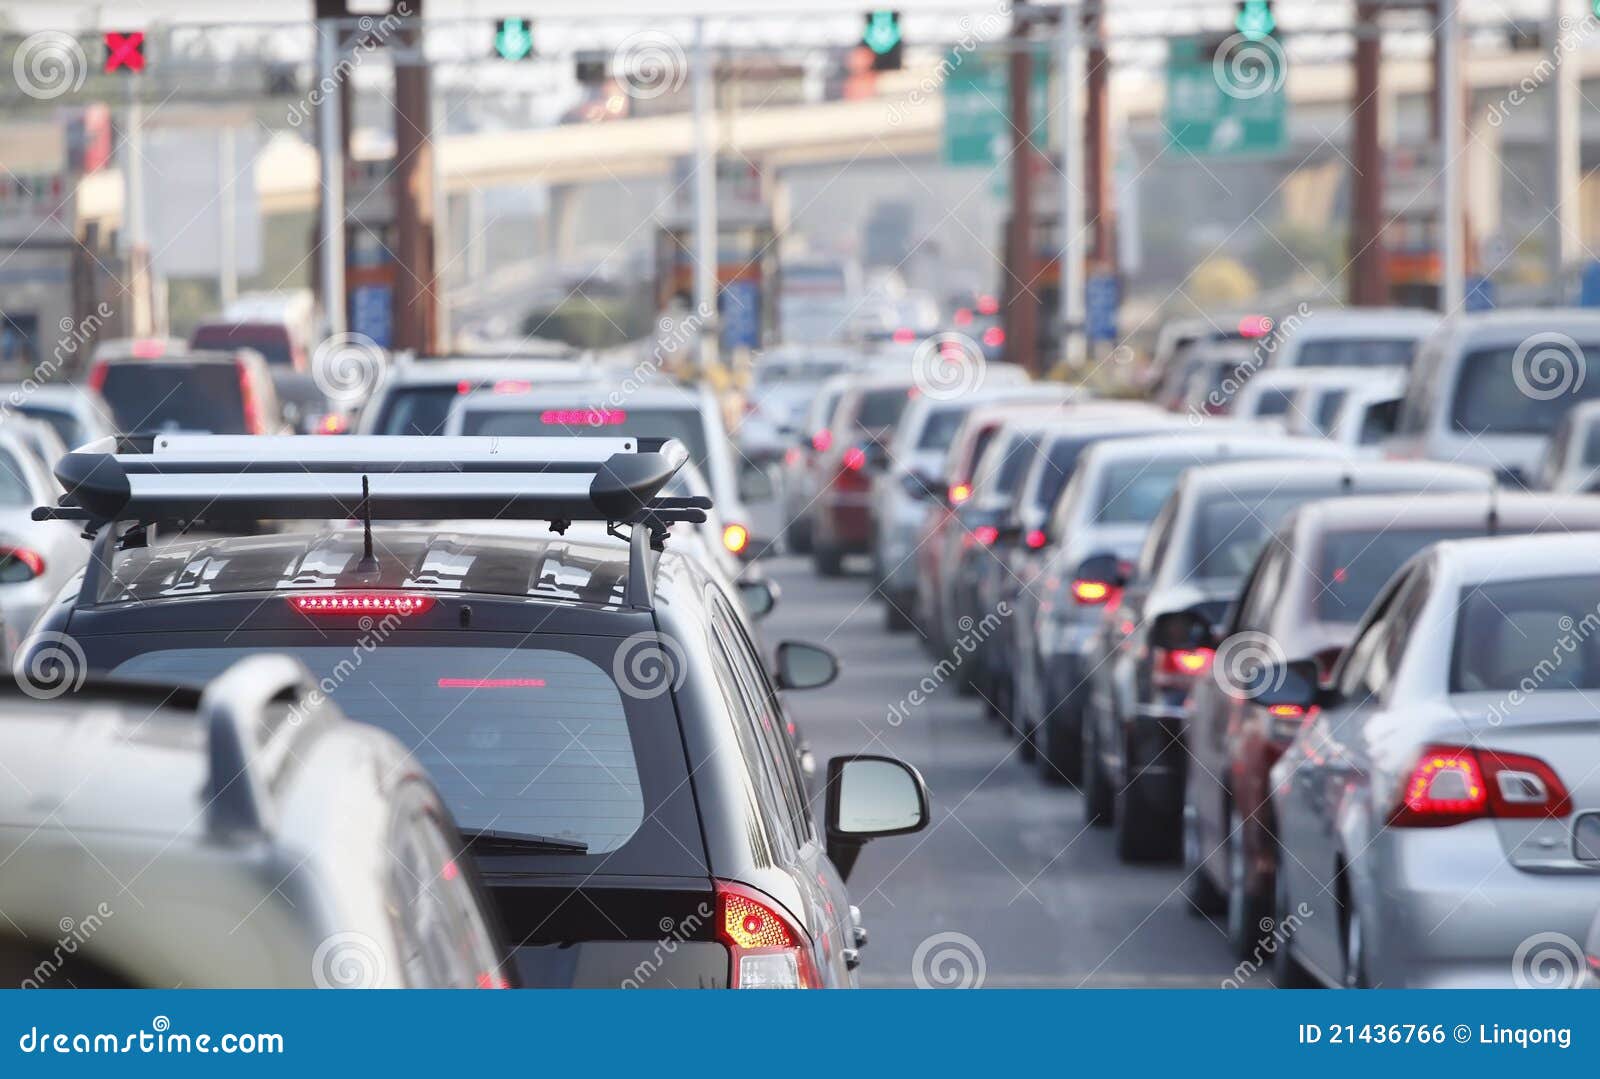 traffic jam in the city